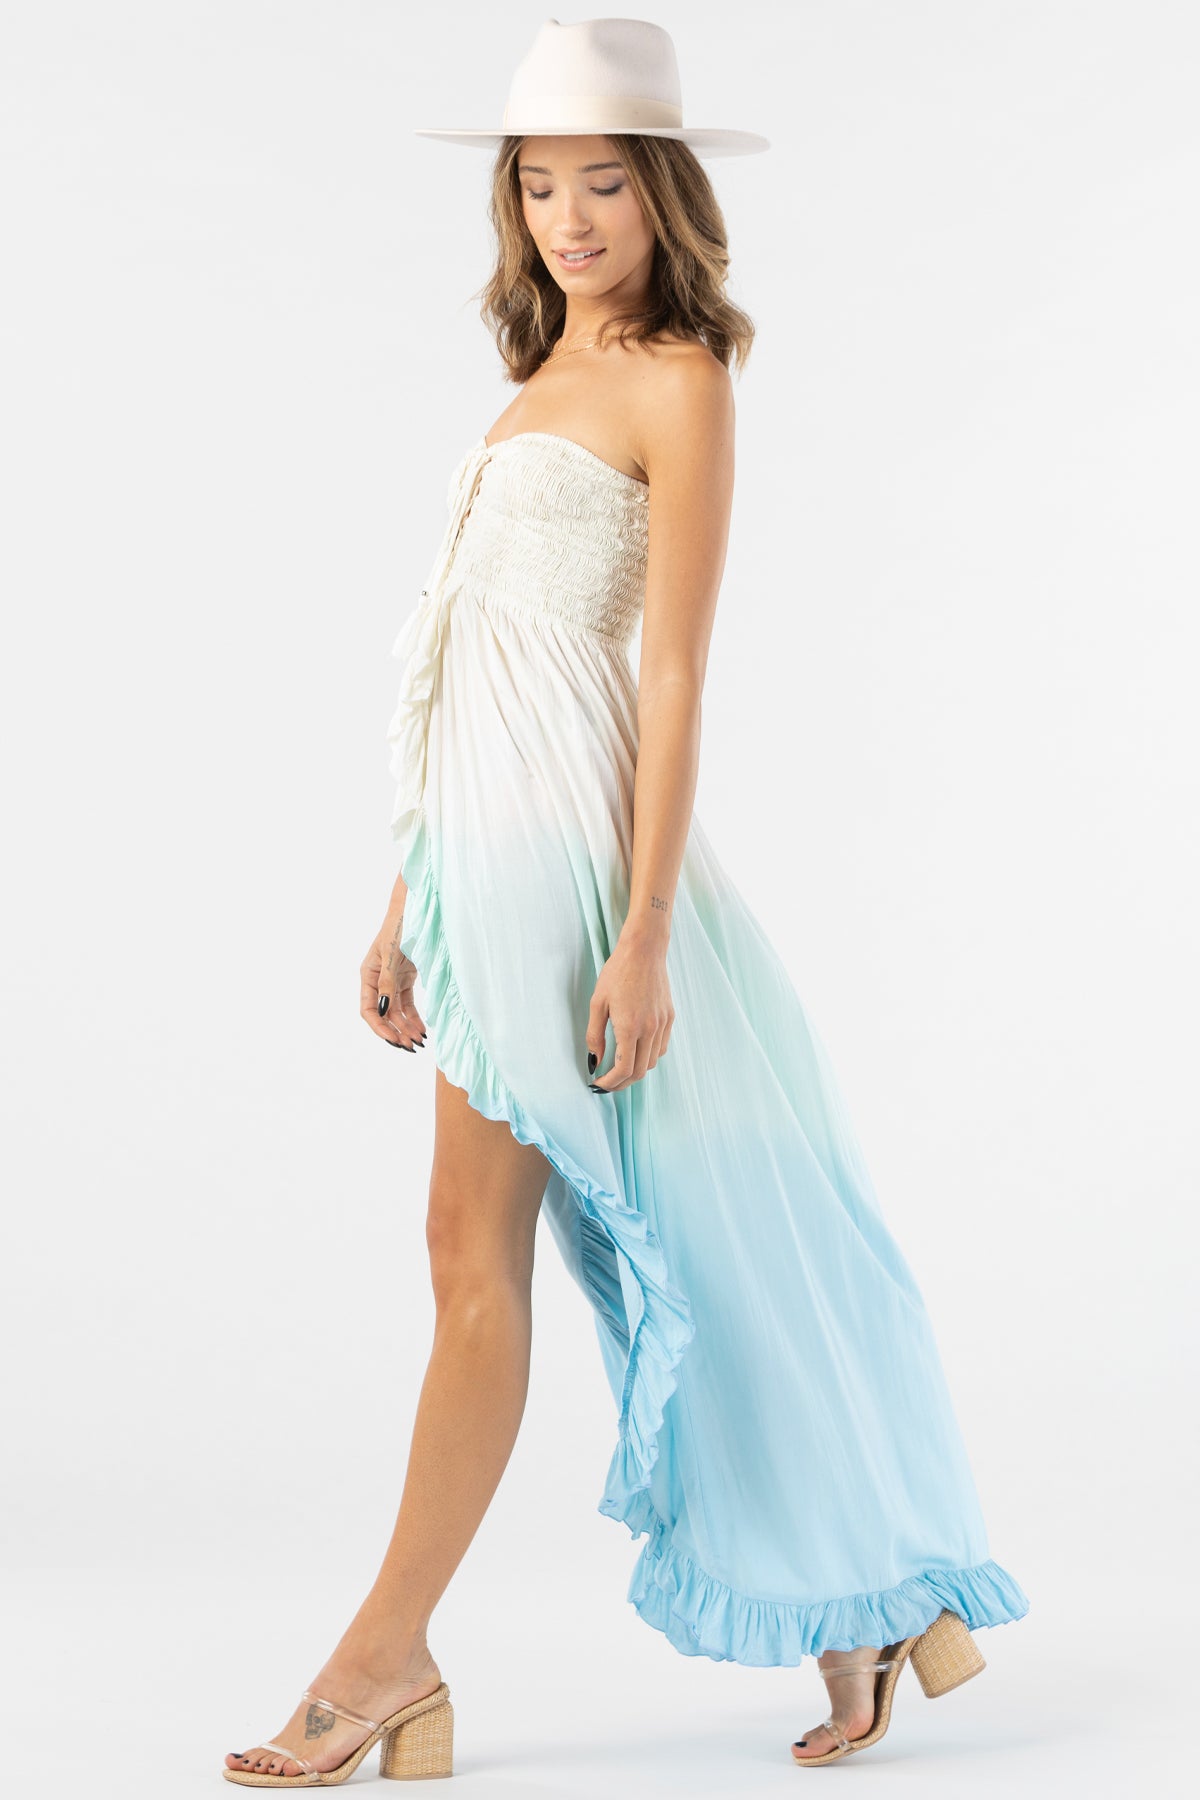 Tiare Hawaii Flynn Maxi Dress - Cream Teal Blue Ombre